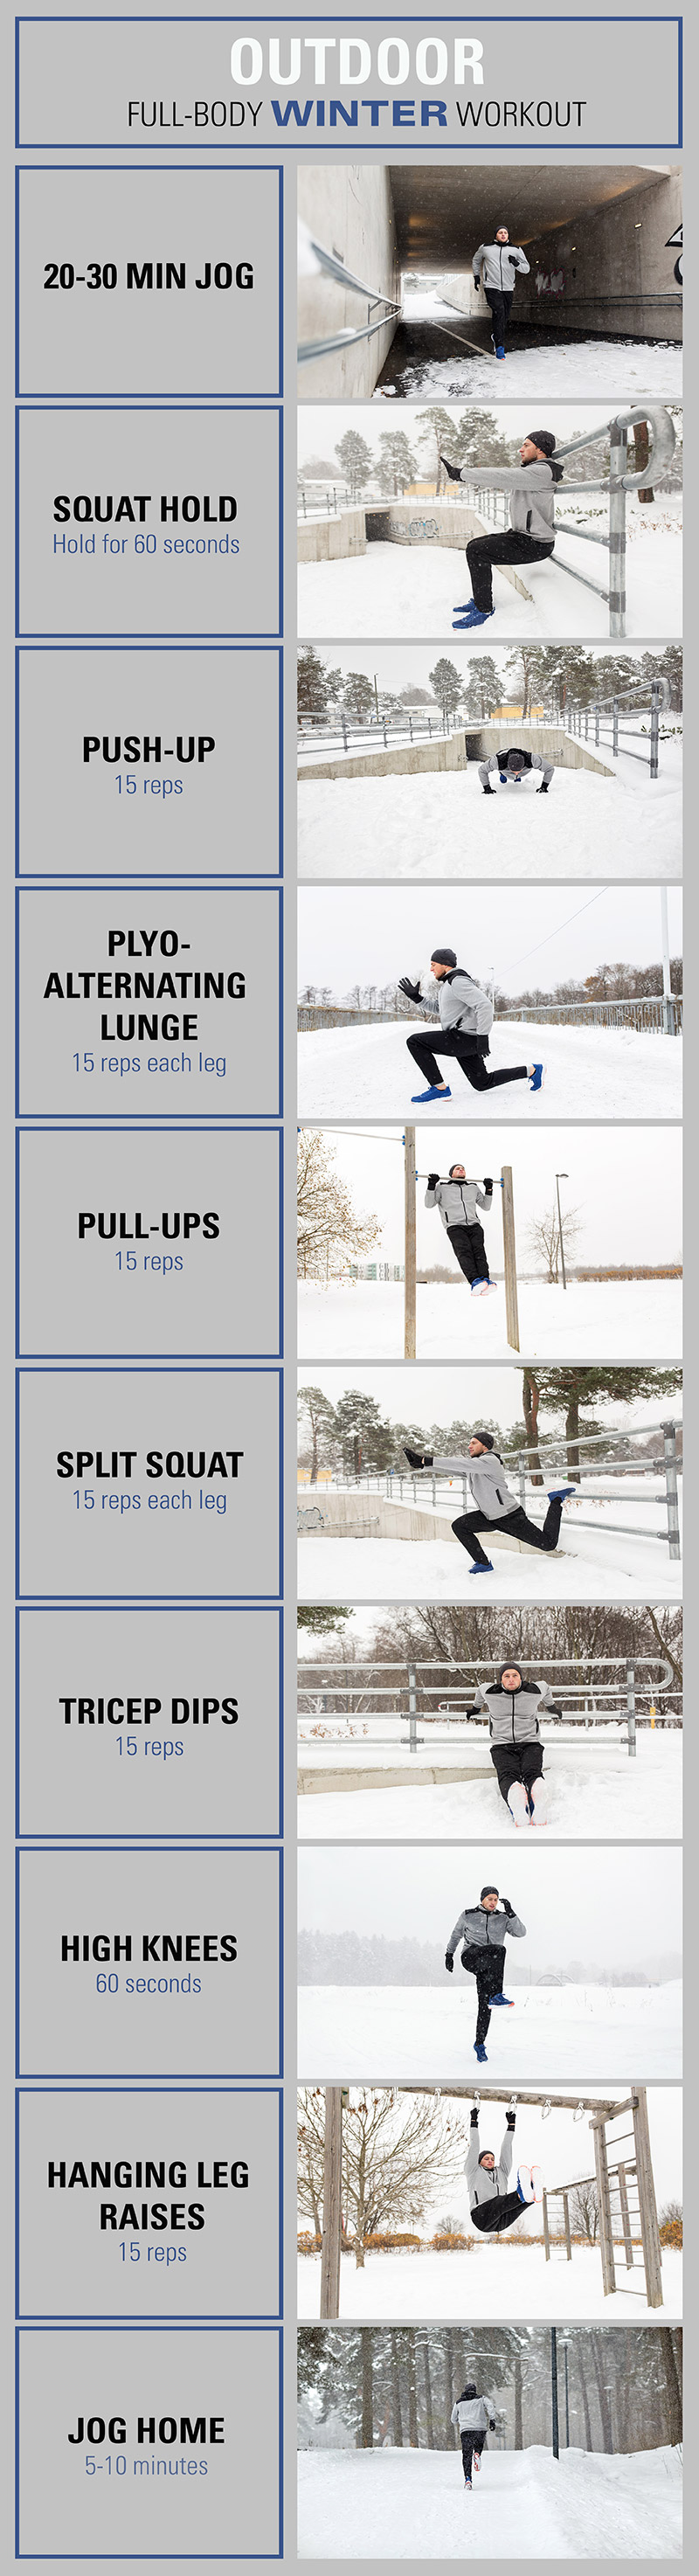 full-body-winter-workout